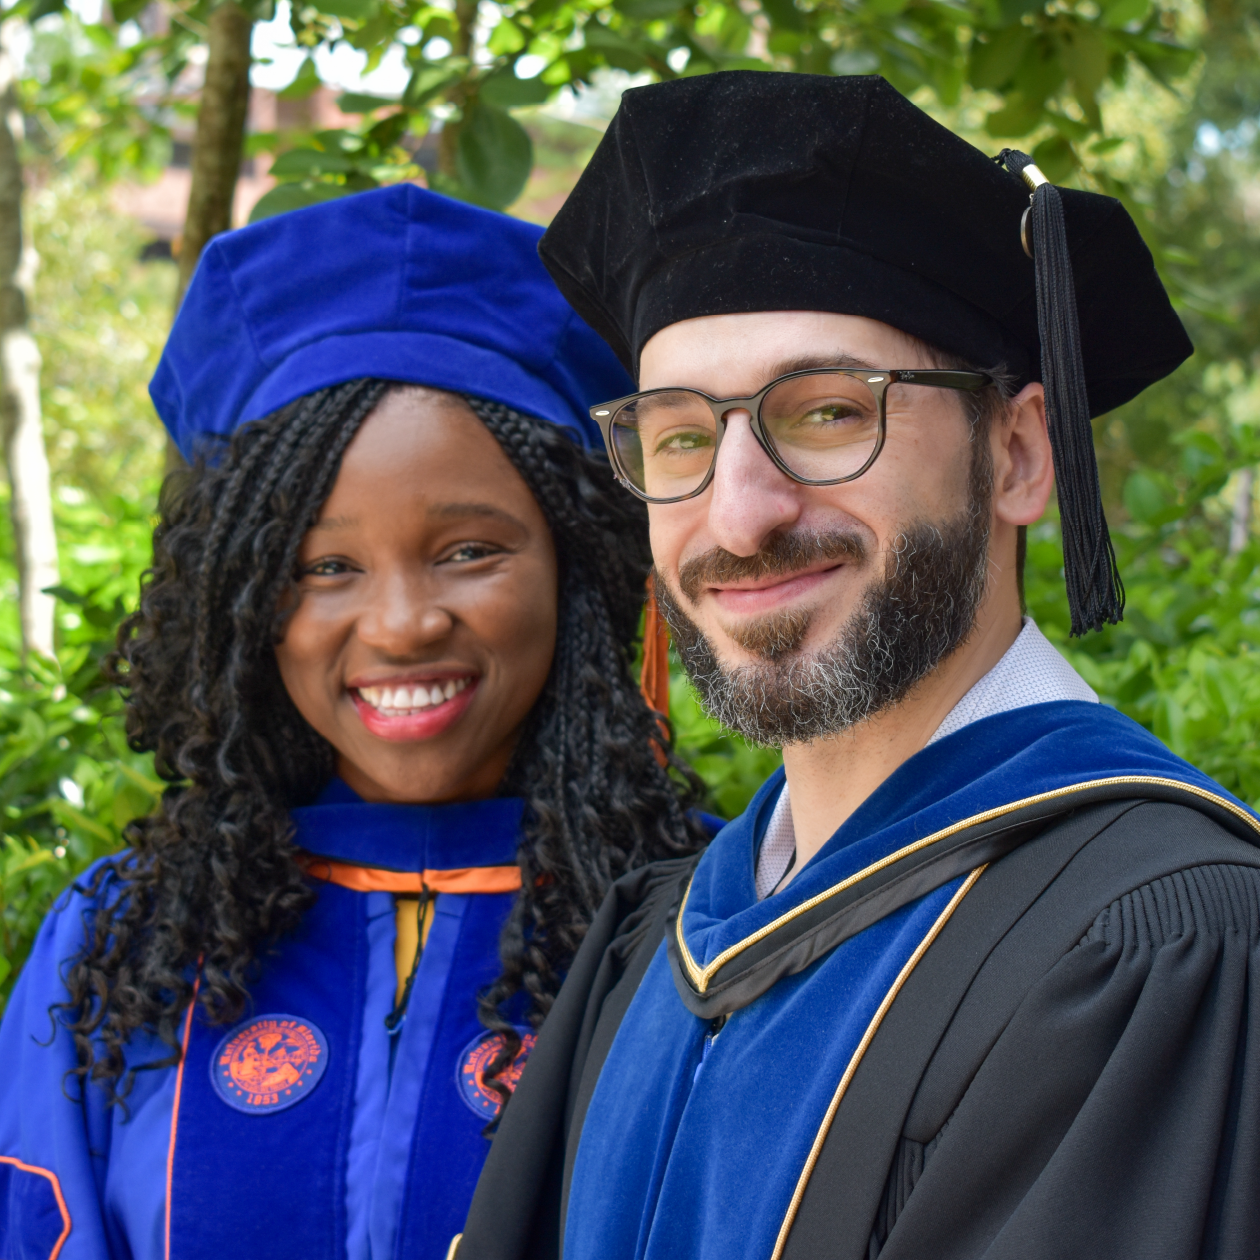 Ph.D. student and advisor wearing graduation regalia